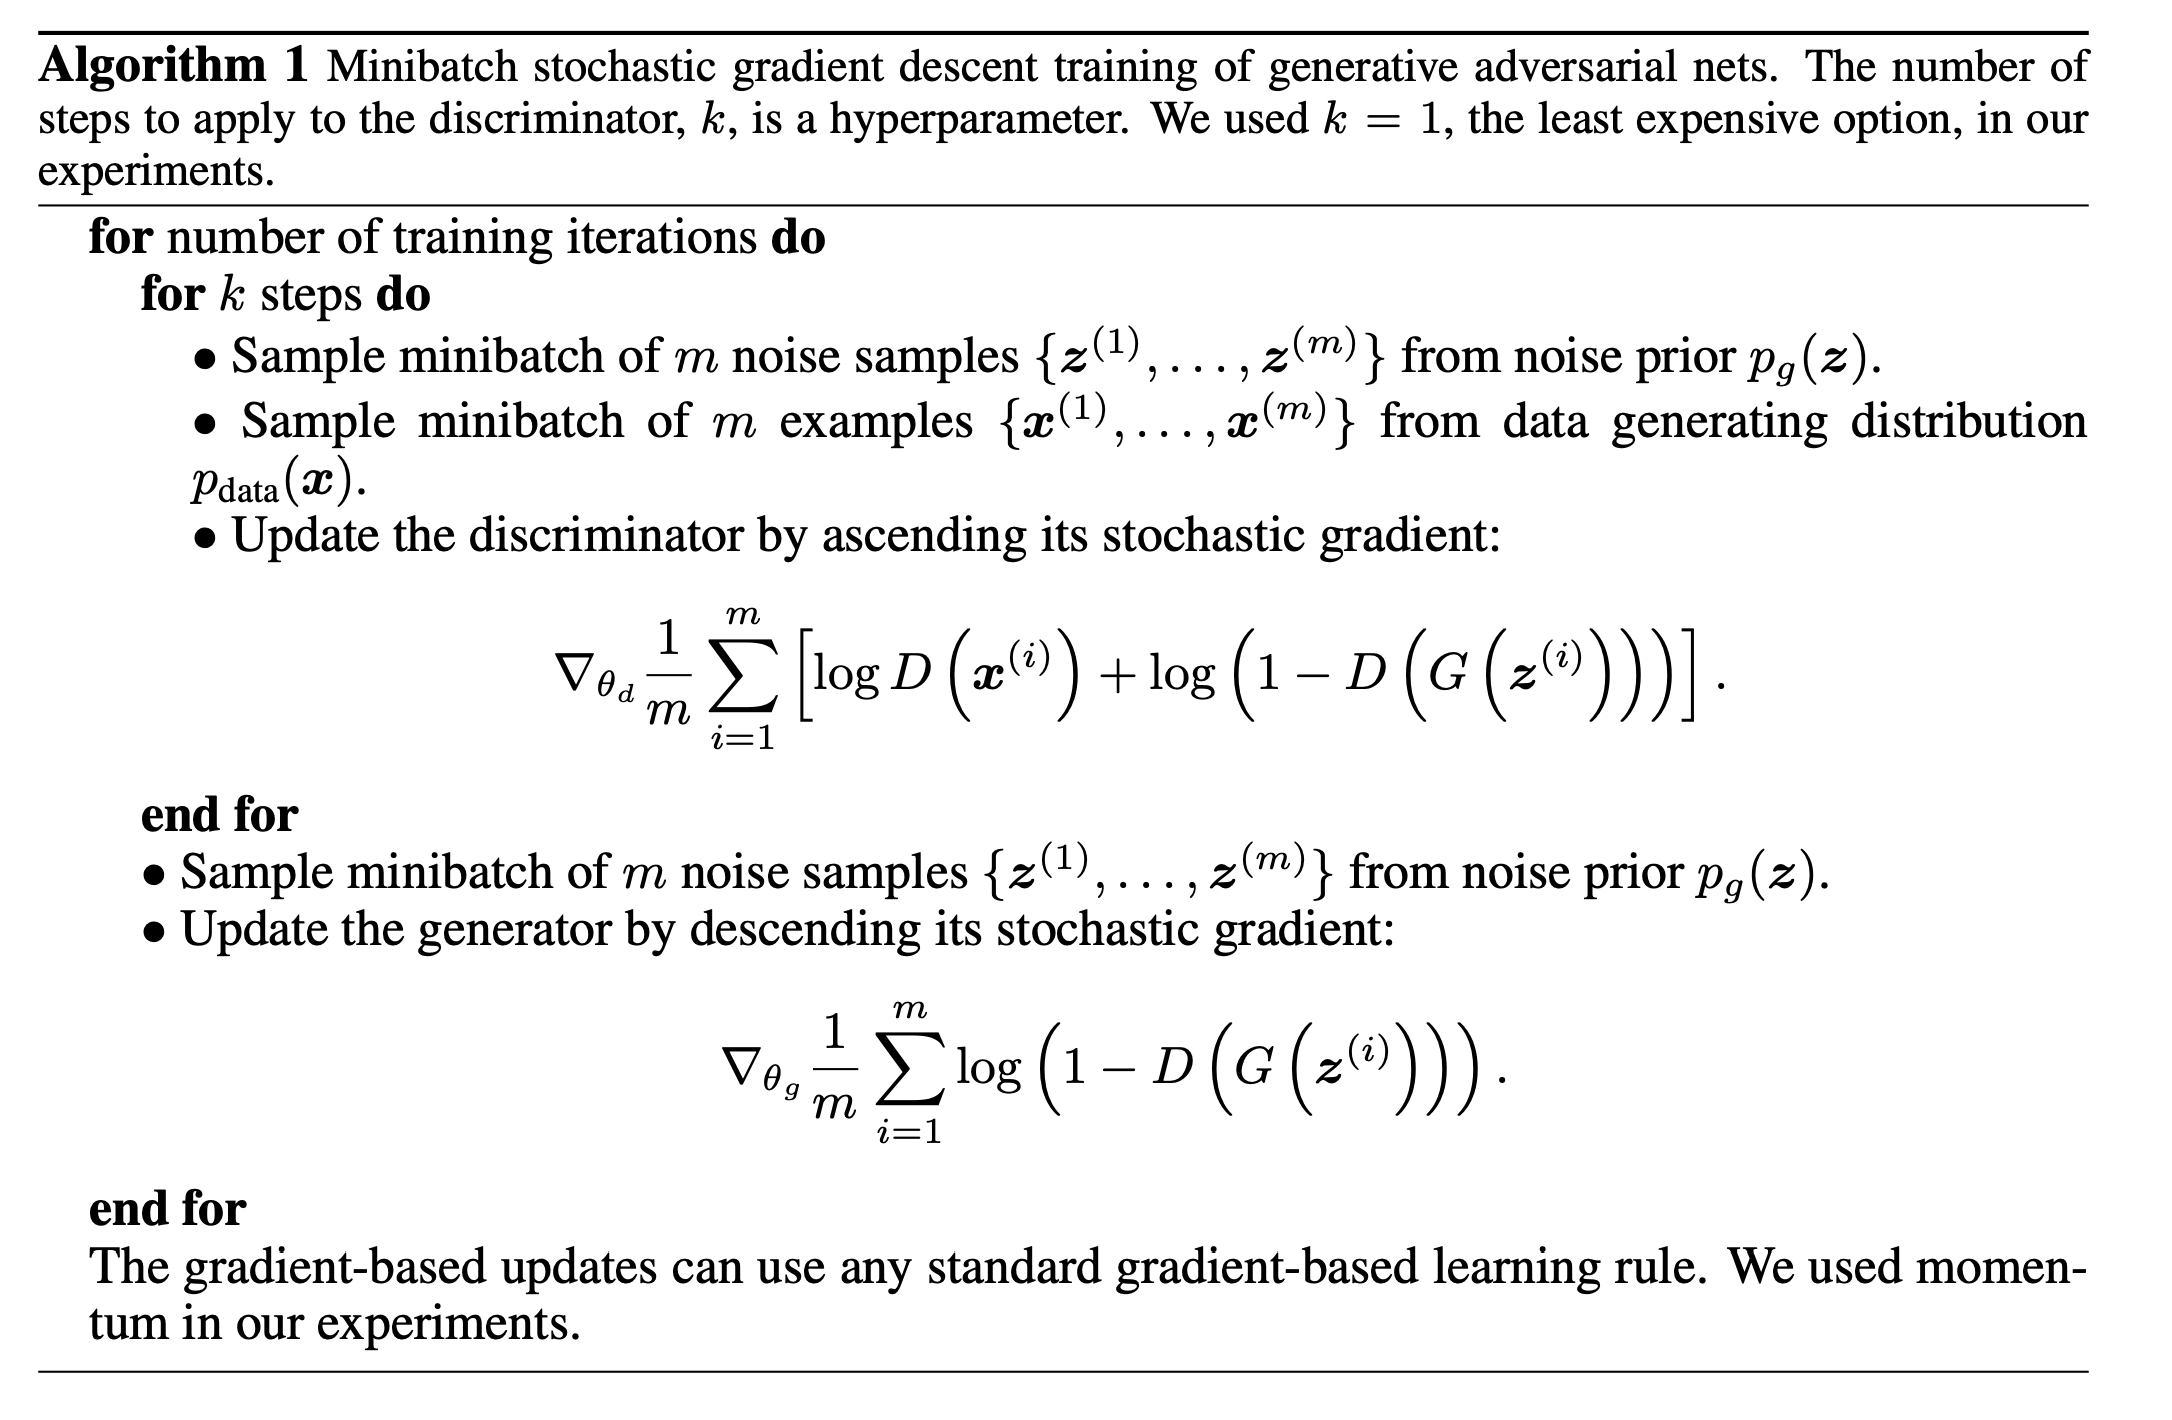 Taken from “Generative Adversarial Nets”, Goodfellow et. al. 2014